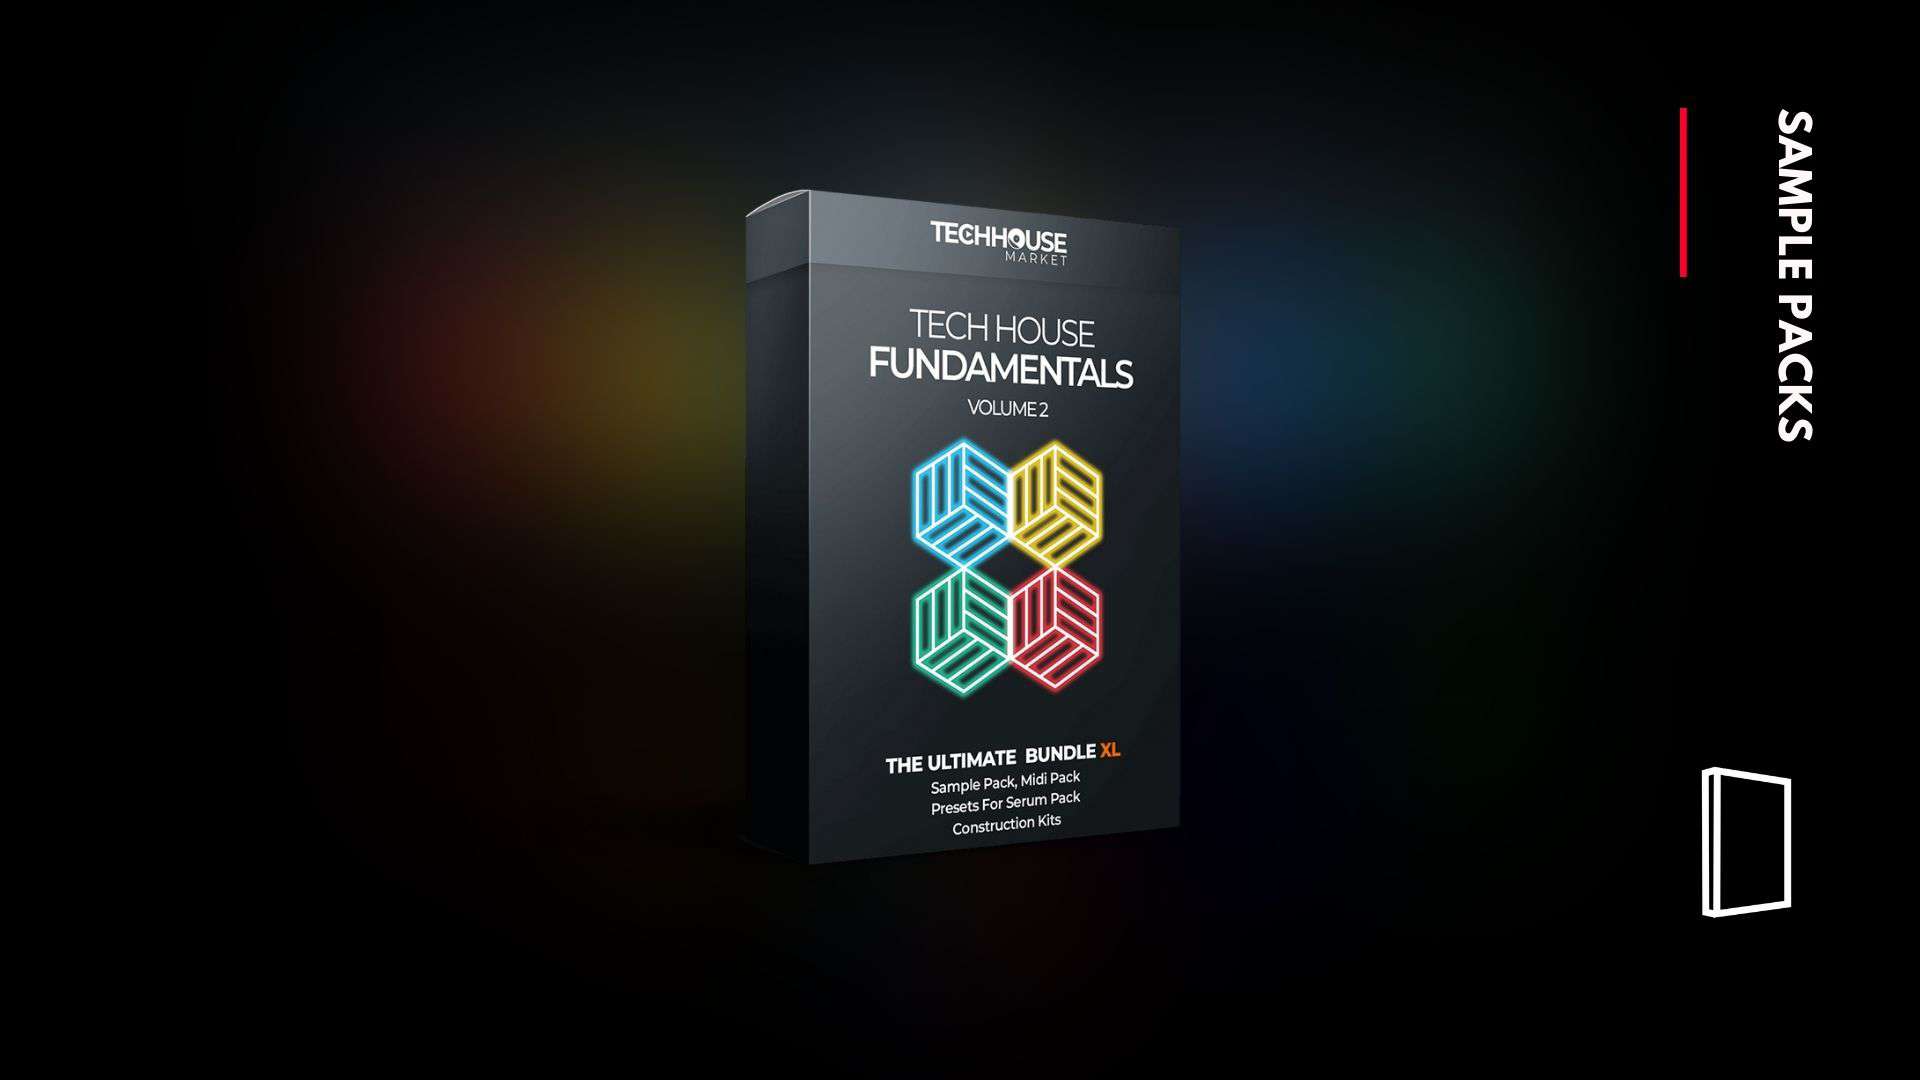 Tech House Market launches high quality sample pack bundle: Tech House Fundamentals Vol. 2